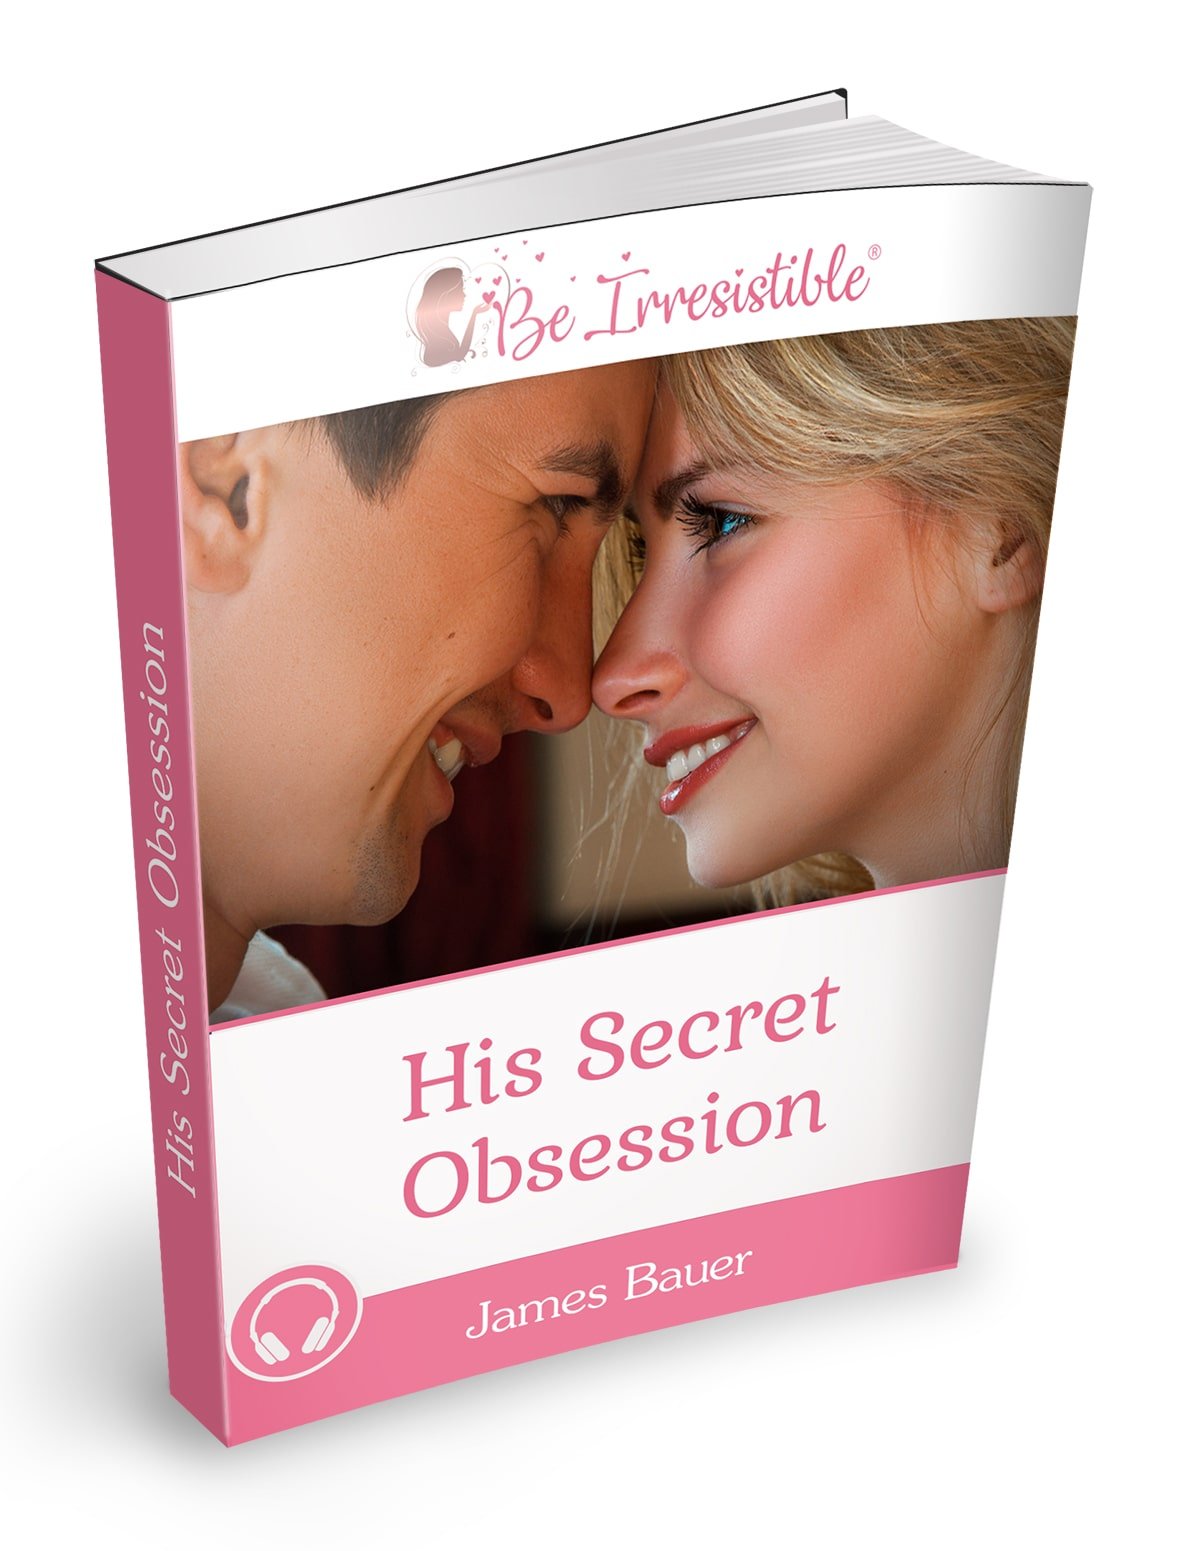 his secret obsession pdf free